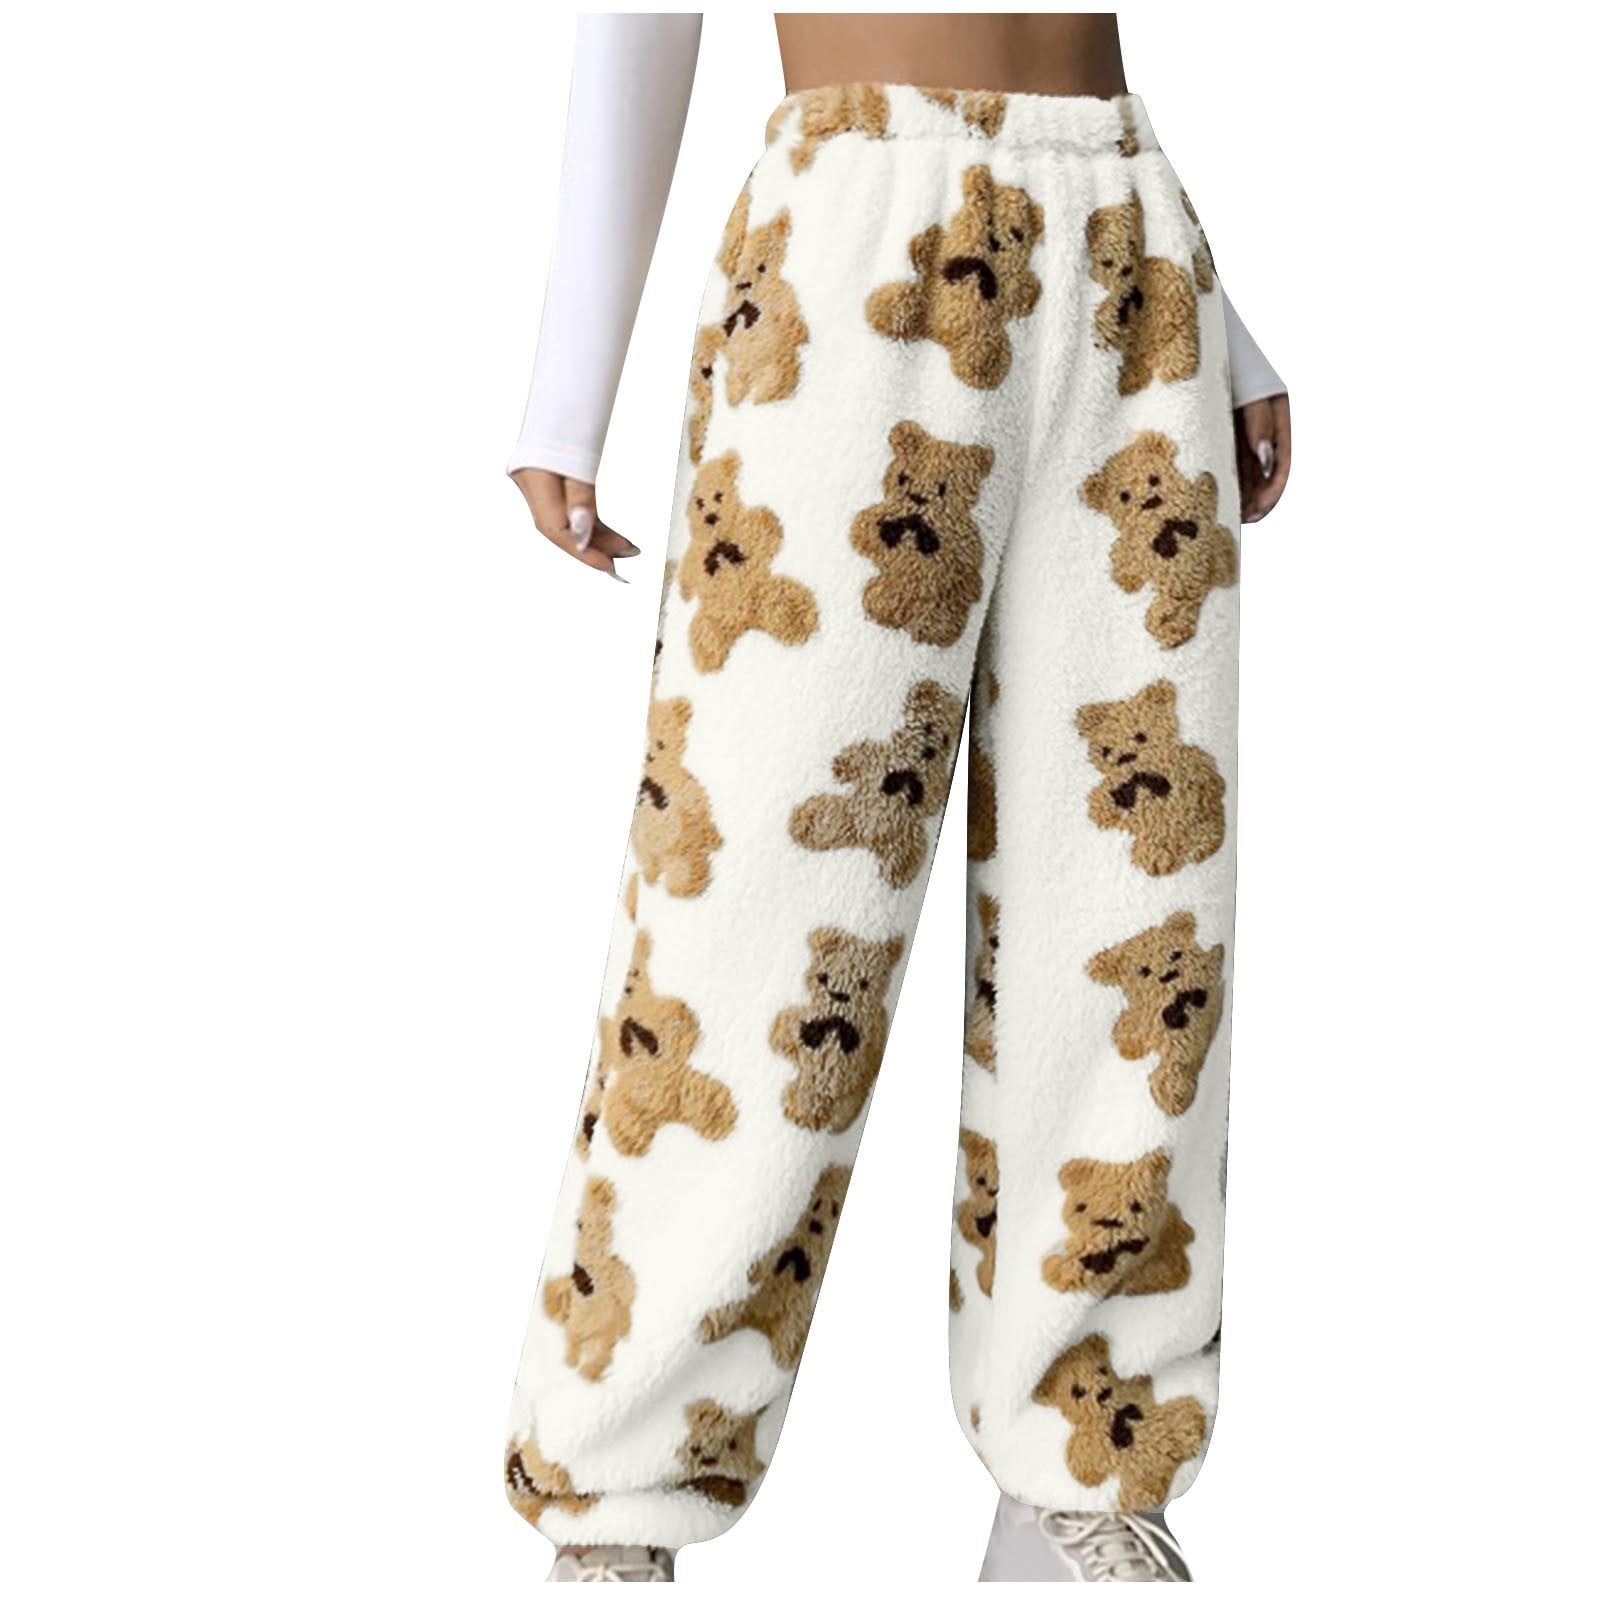 RYRJJ Women's Winter Warm Fleece Pajama Pants Plus Size Cute Bear Print  Baggy Sweatpants Fuzzy Jogger Lounge Pants Sleepwear with Pockets White XXL  